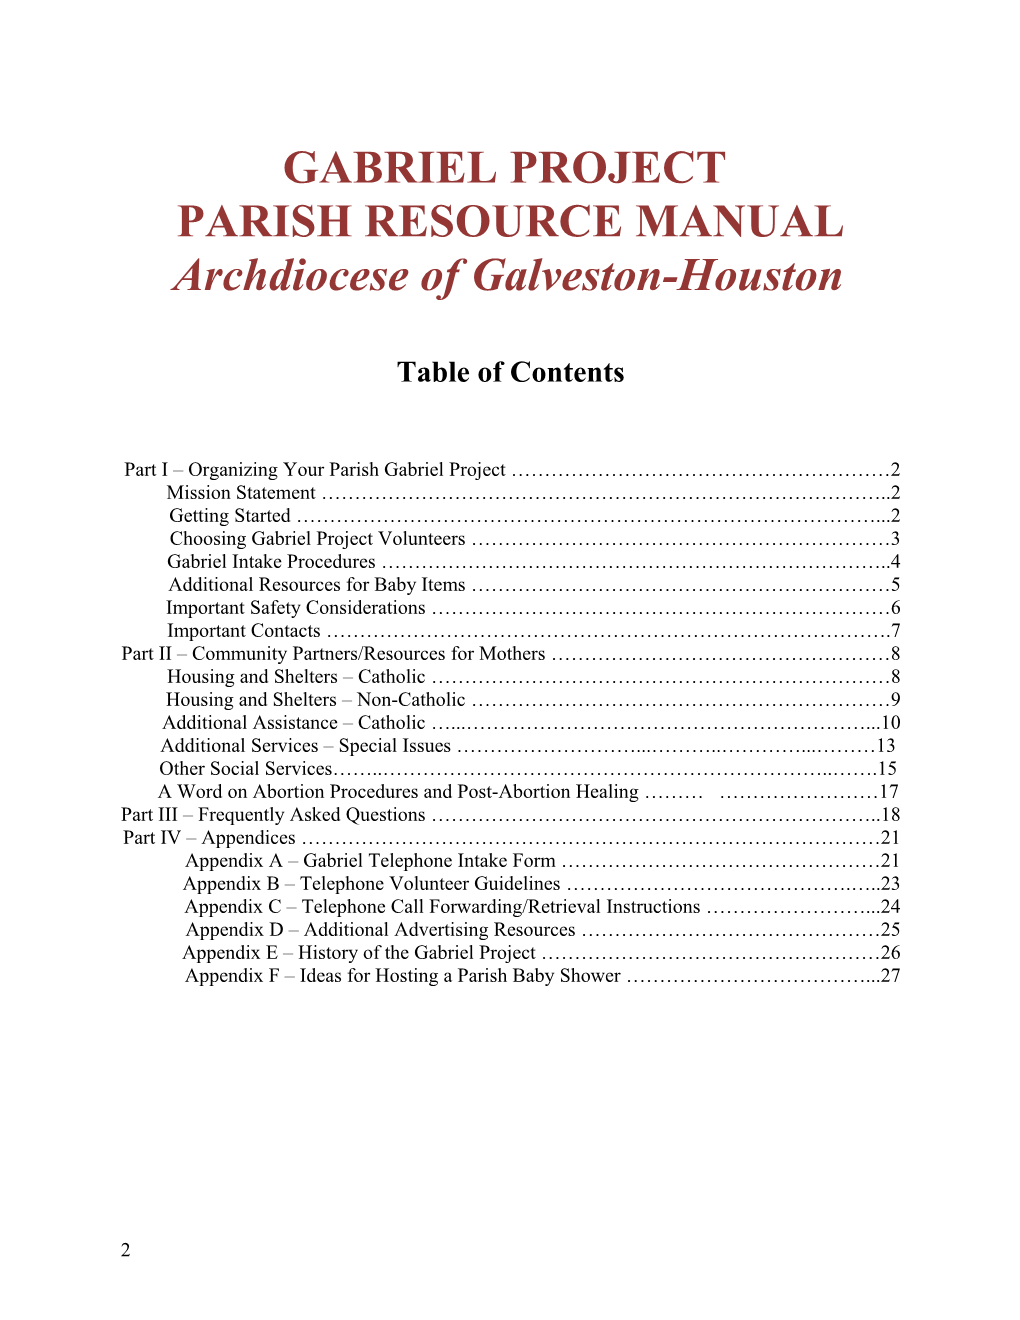 Manual and Parish Resources